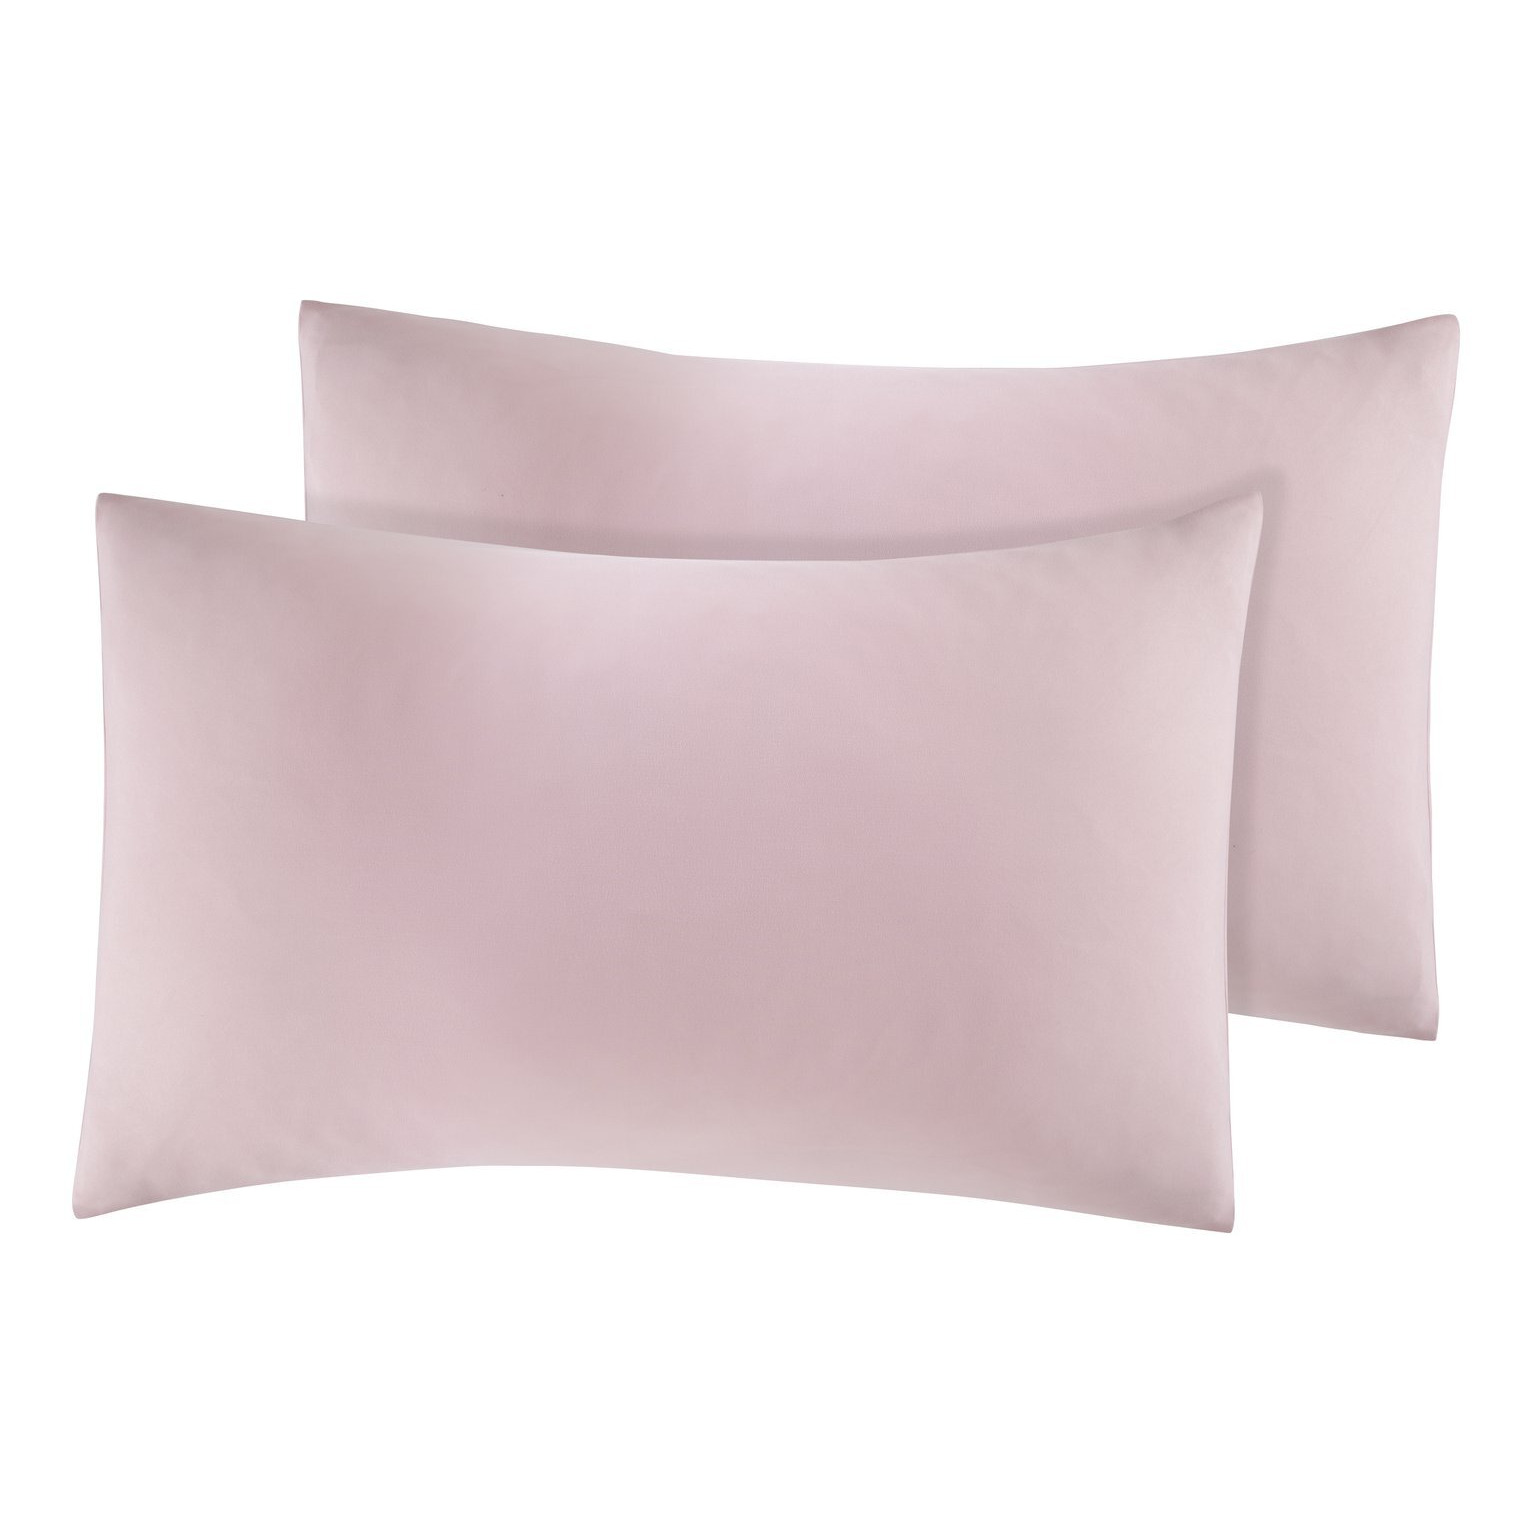 Silentnight Supersoft Standard Pillowcase Pair - Blush - image 1